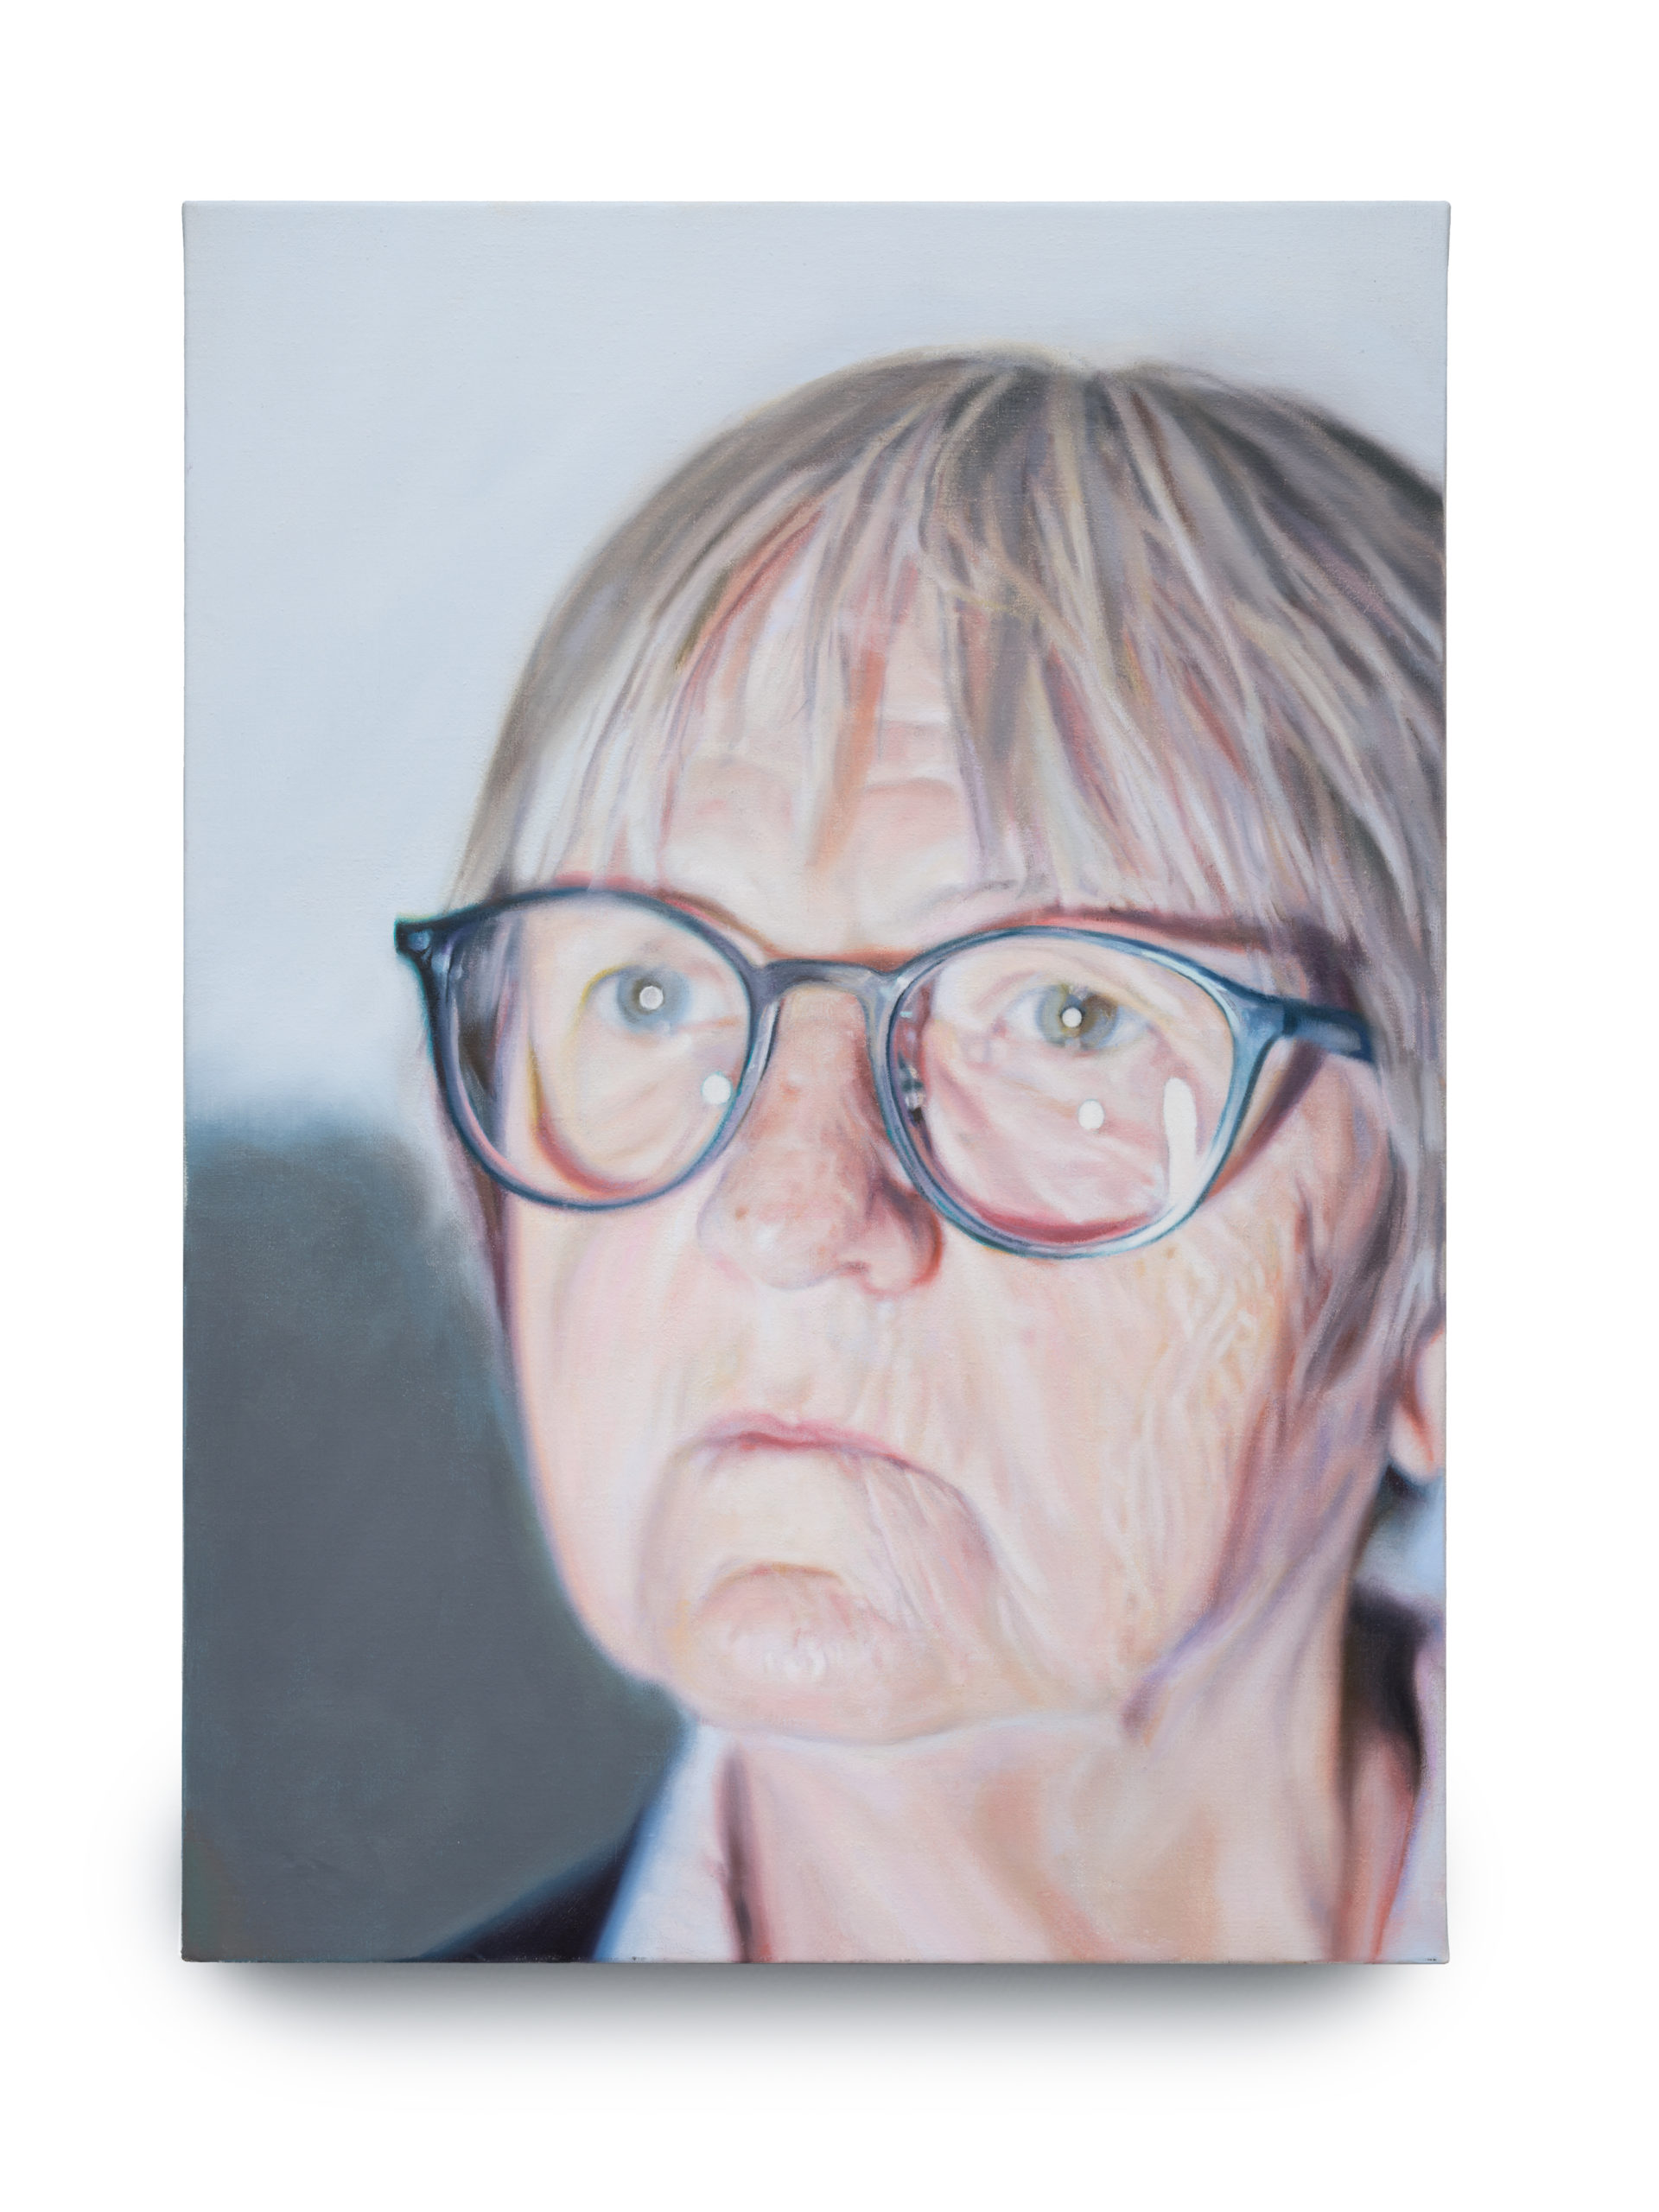 Niklas Holmgren, "Mother / Gunilla", 2021, oil on canvas, 56 x 40 cm